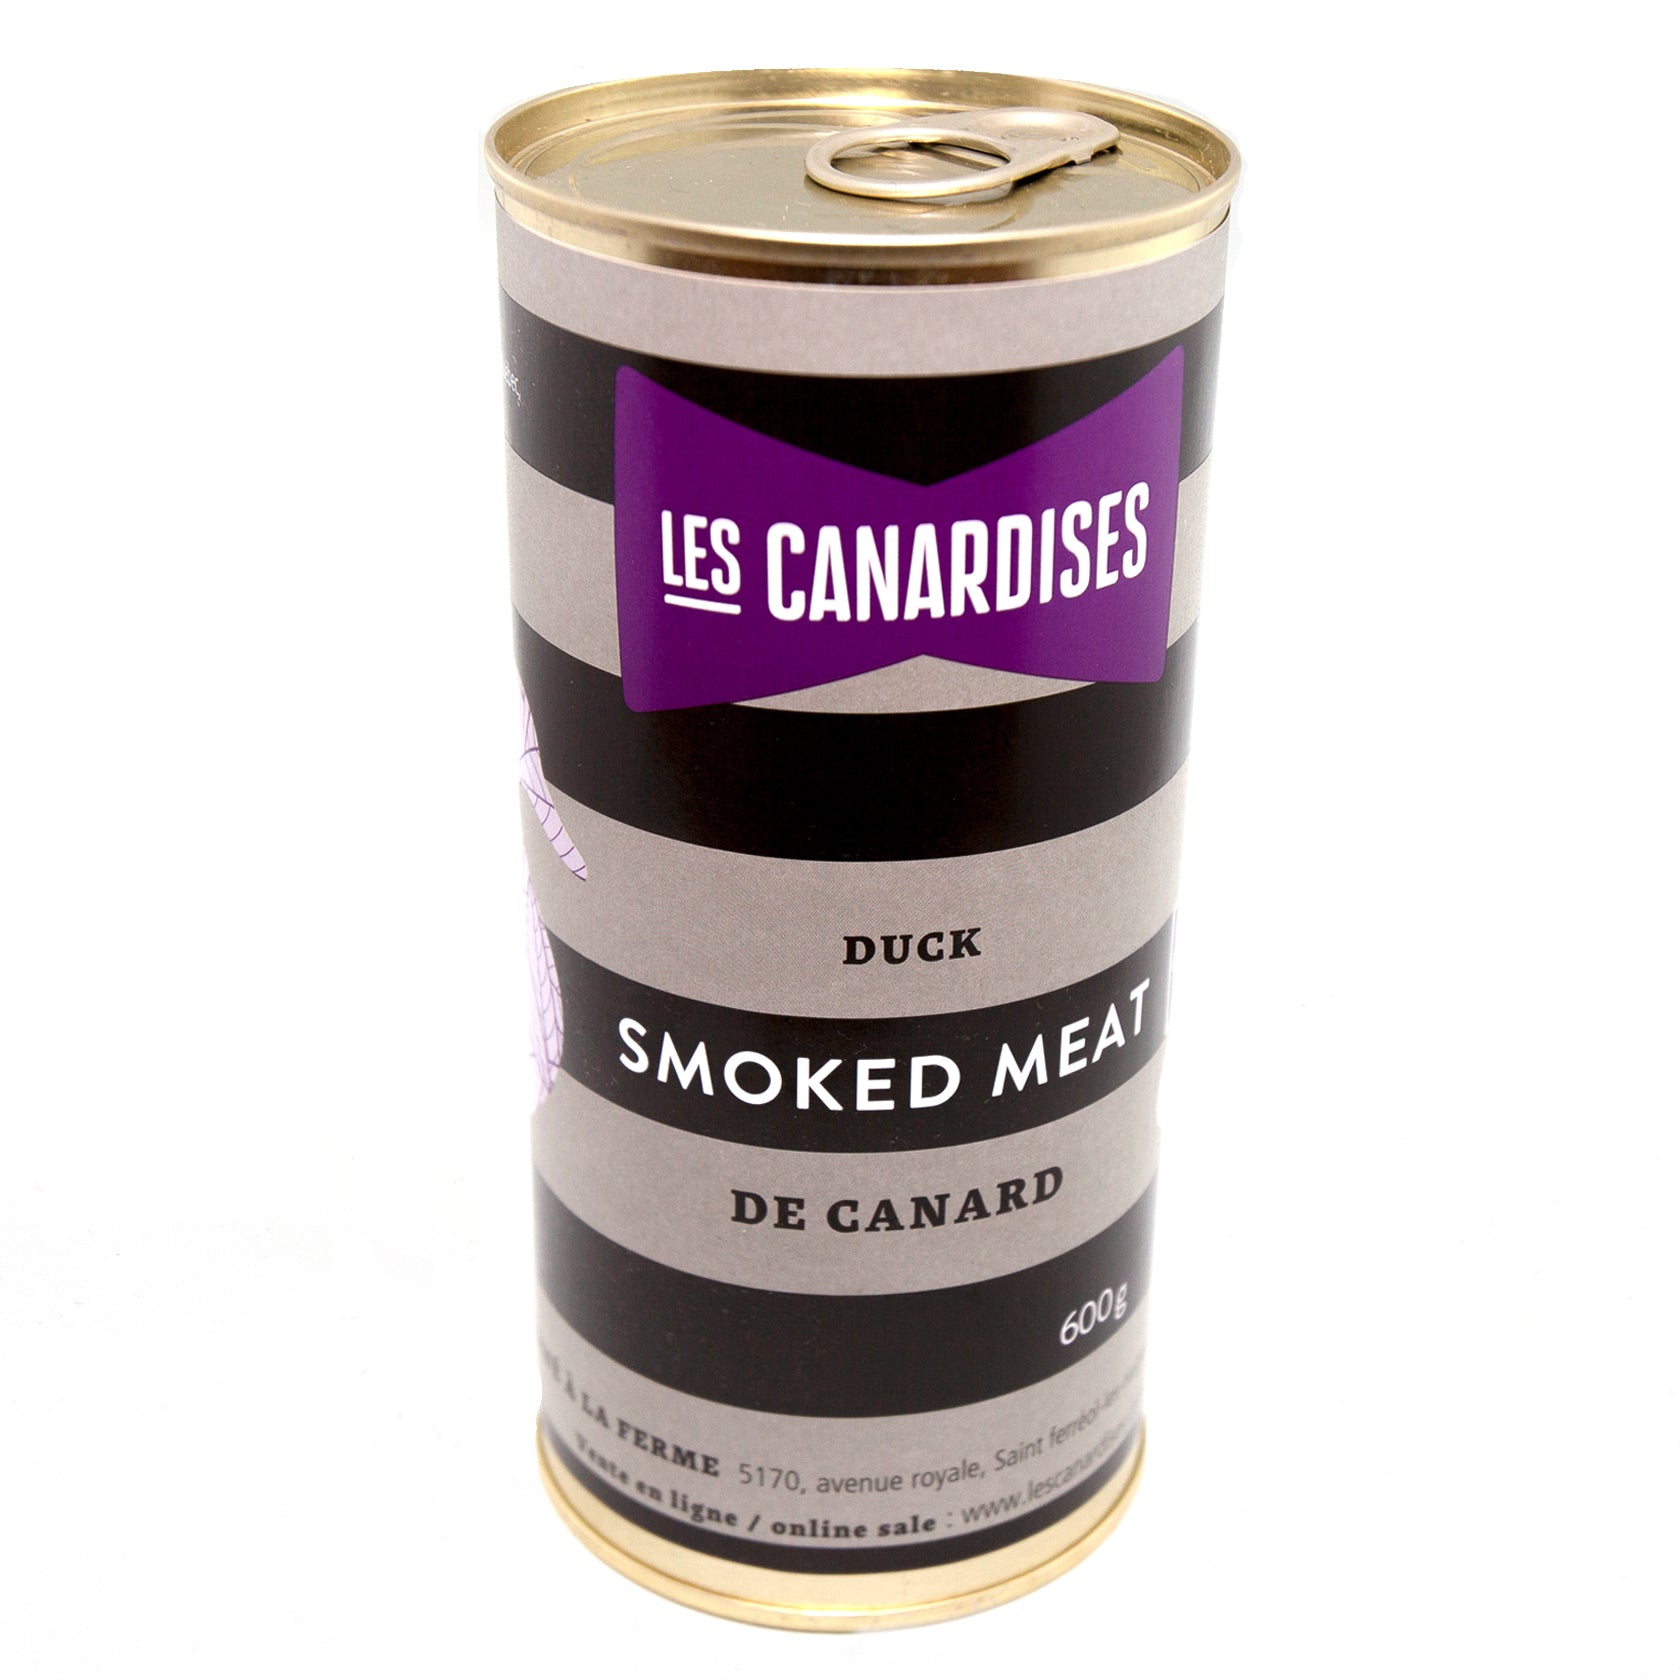 SMOKED MEAT de canard - 600g    - Les Canardises - Pâté - 